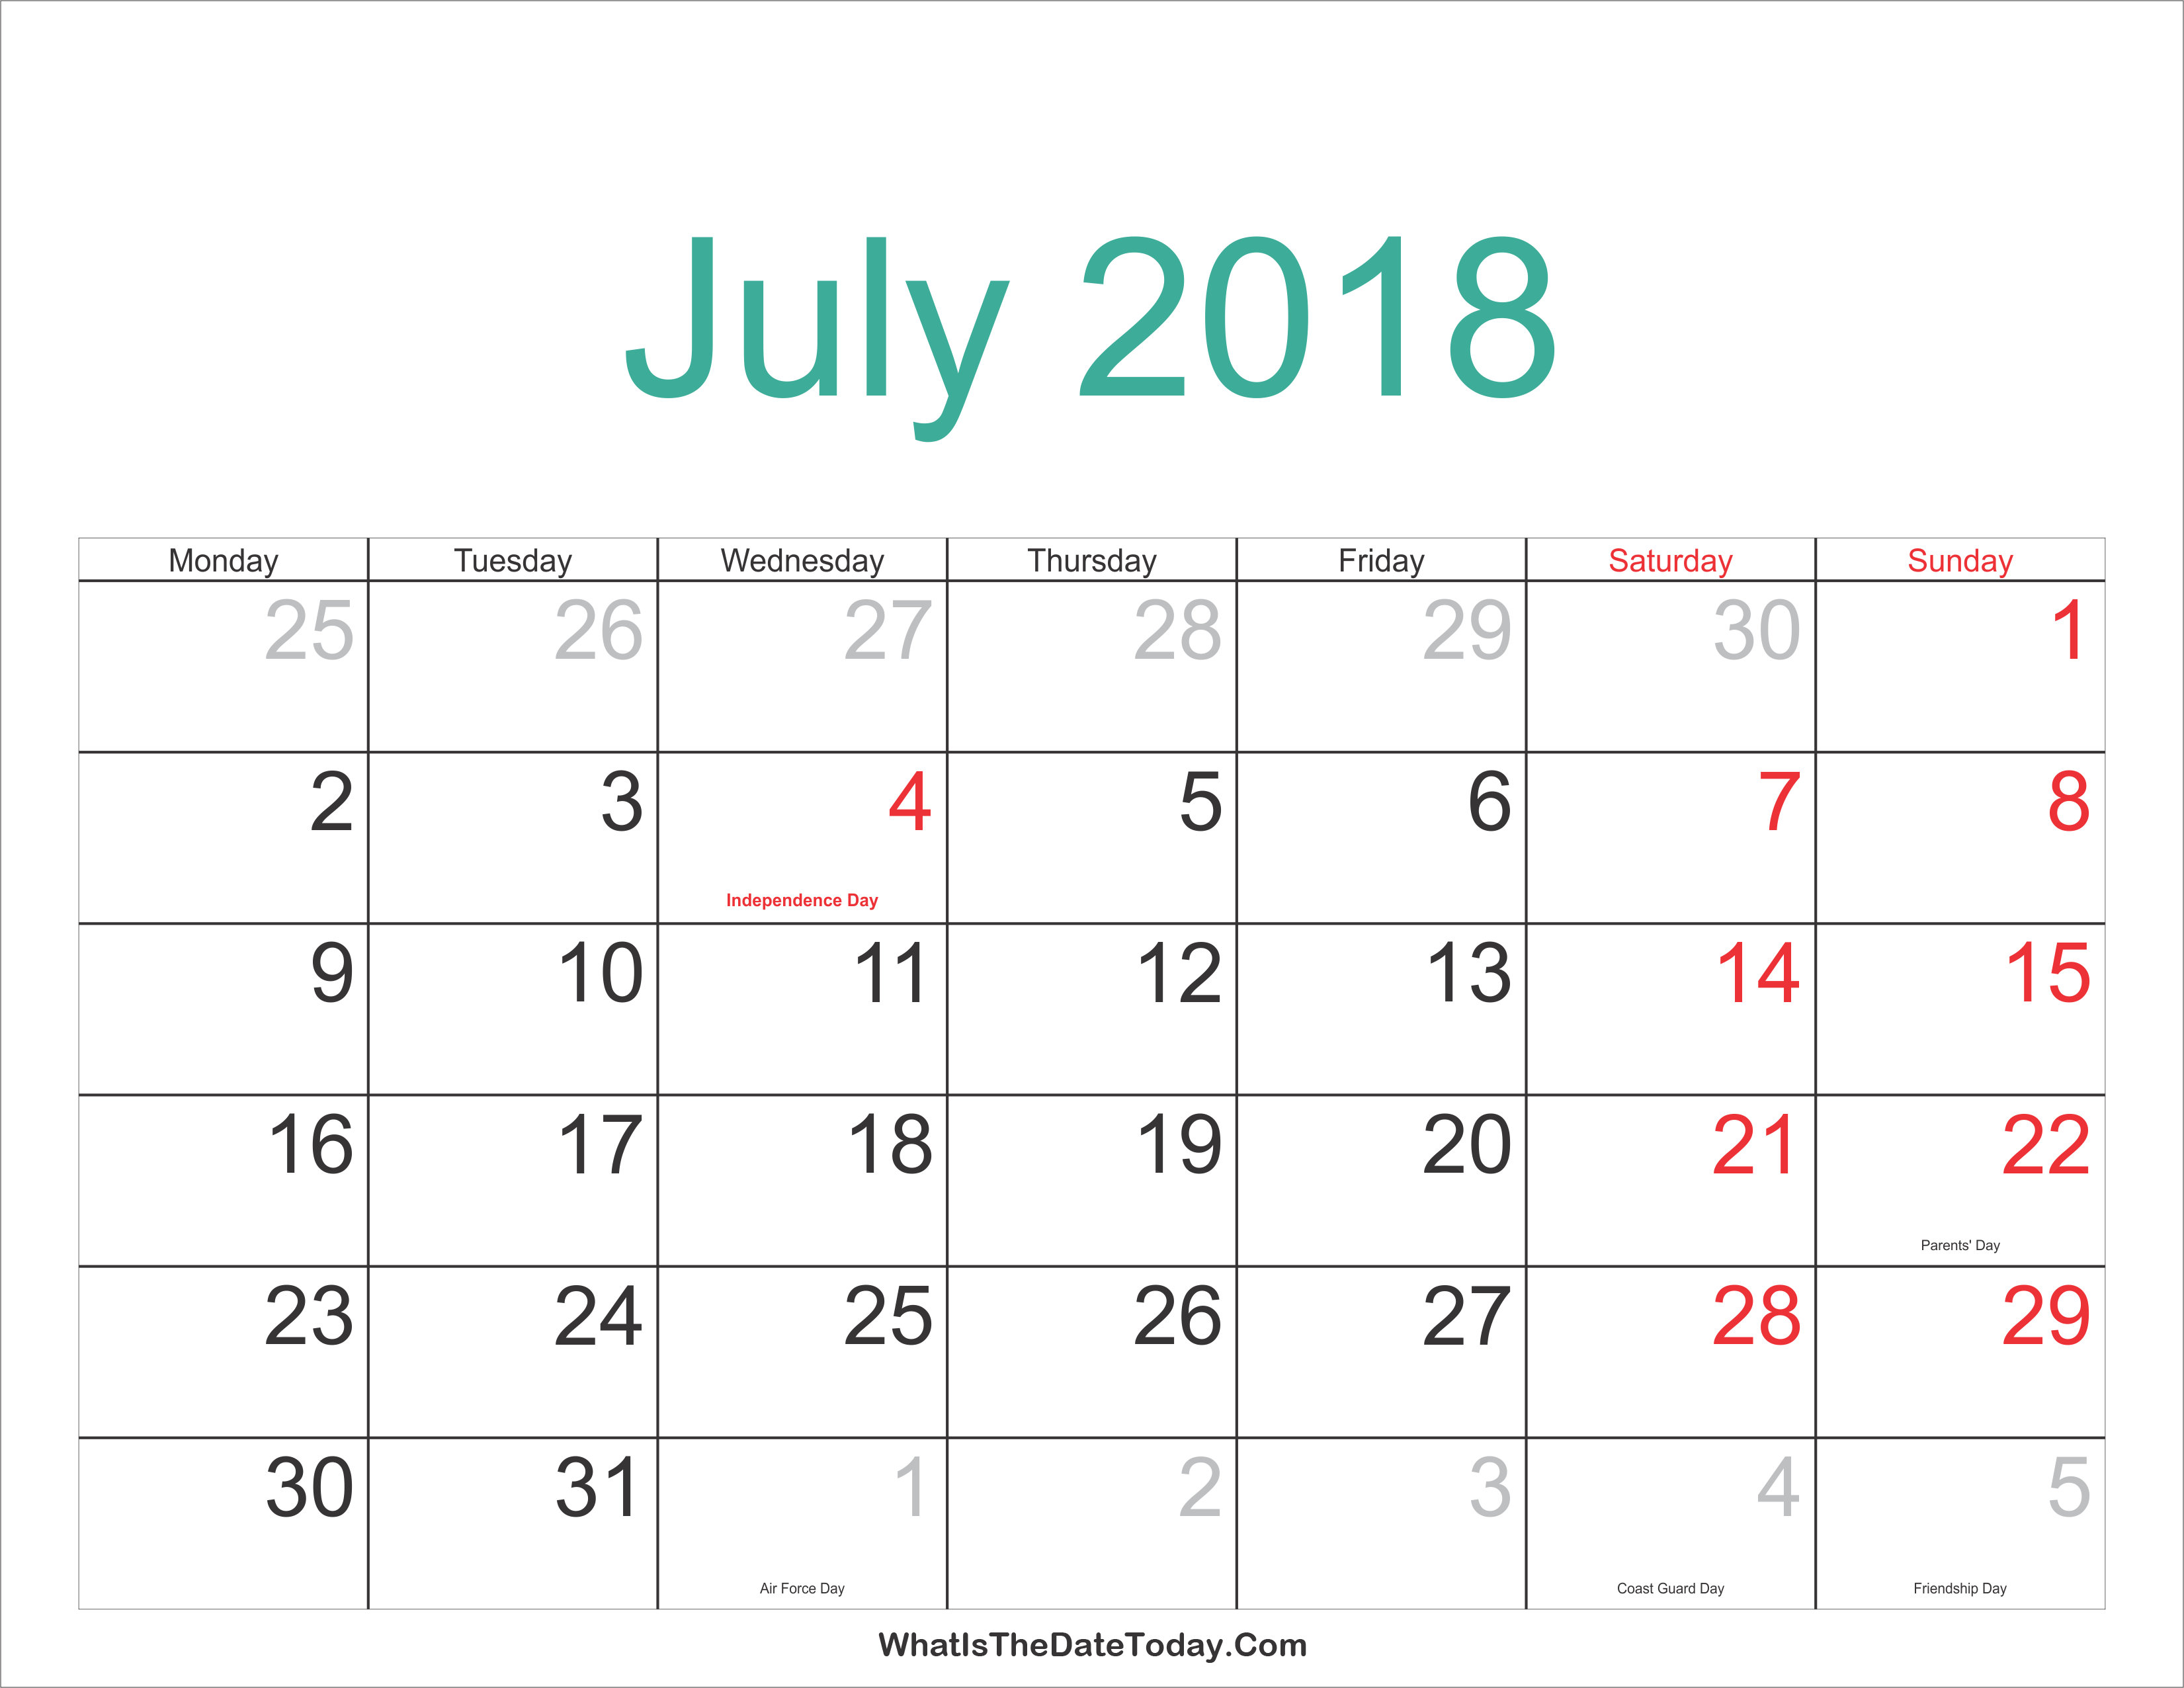 July 2018 Calendar Printable With Holidays Whatisthedatetodaycom